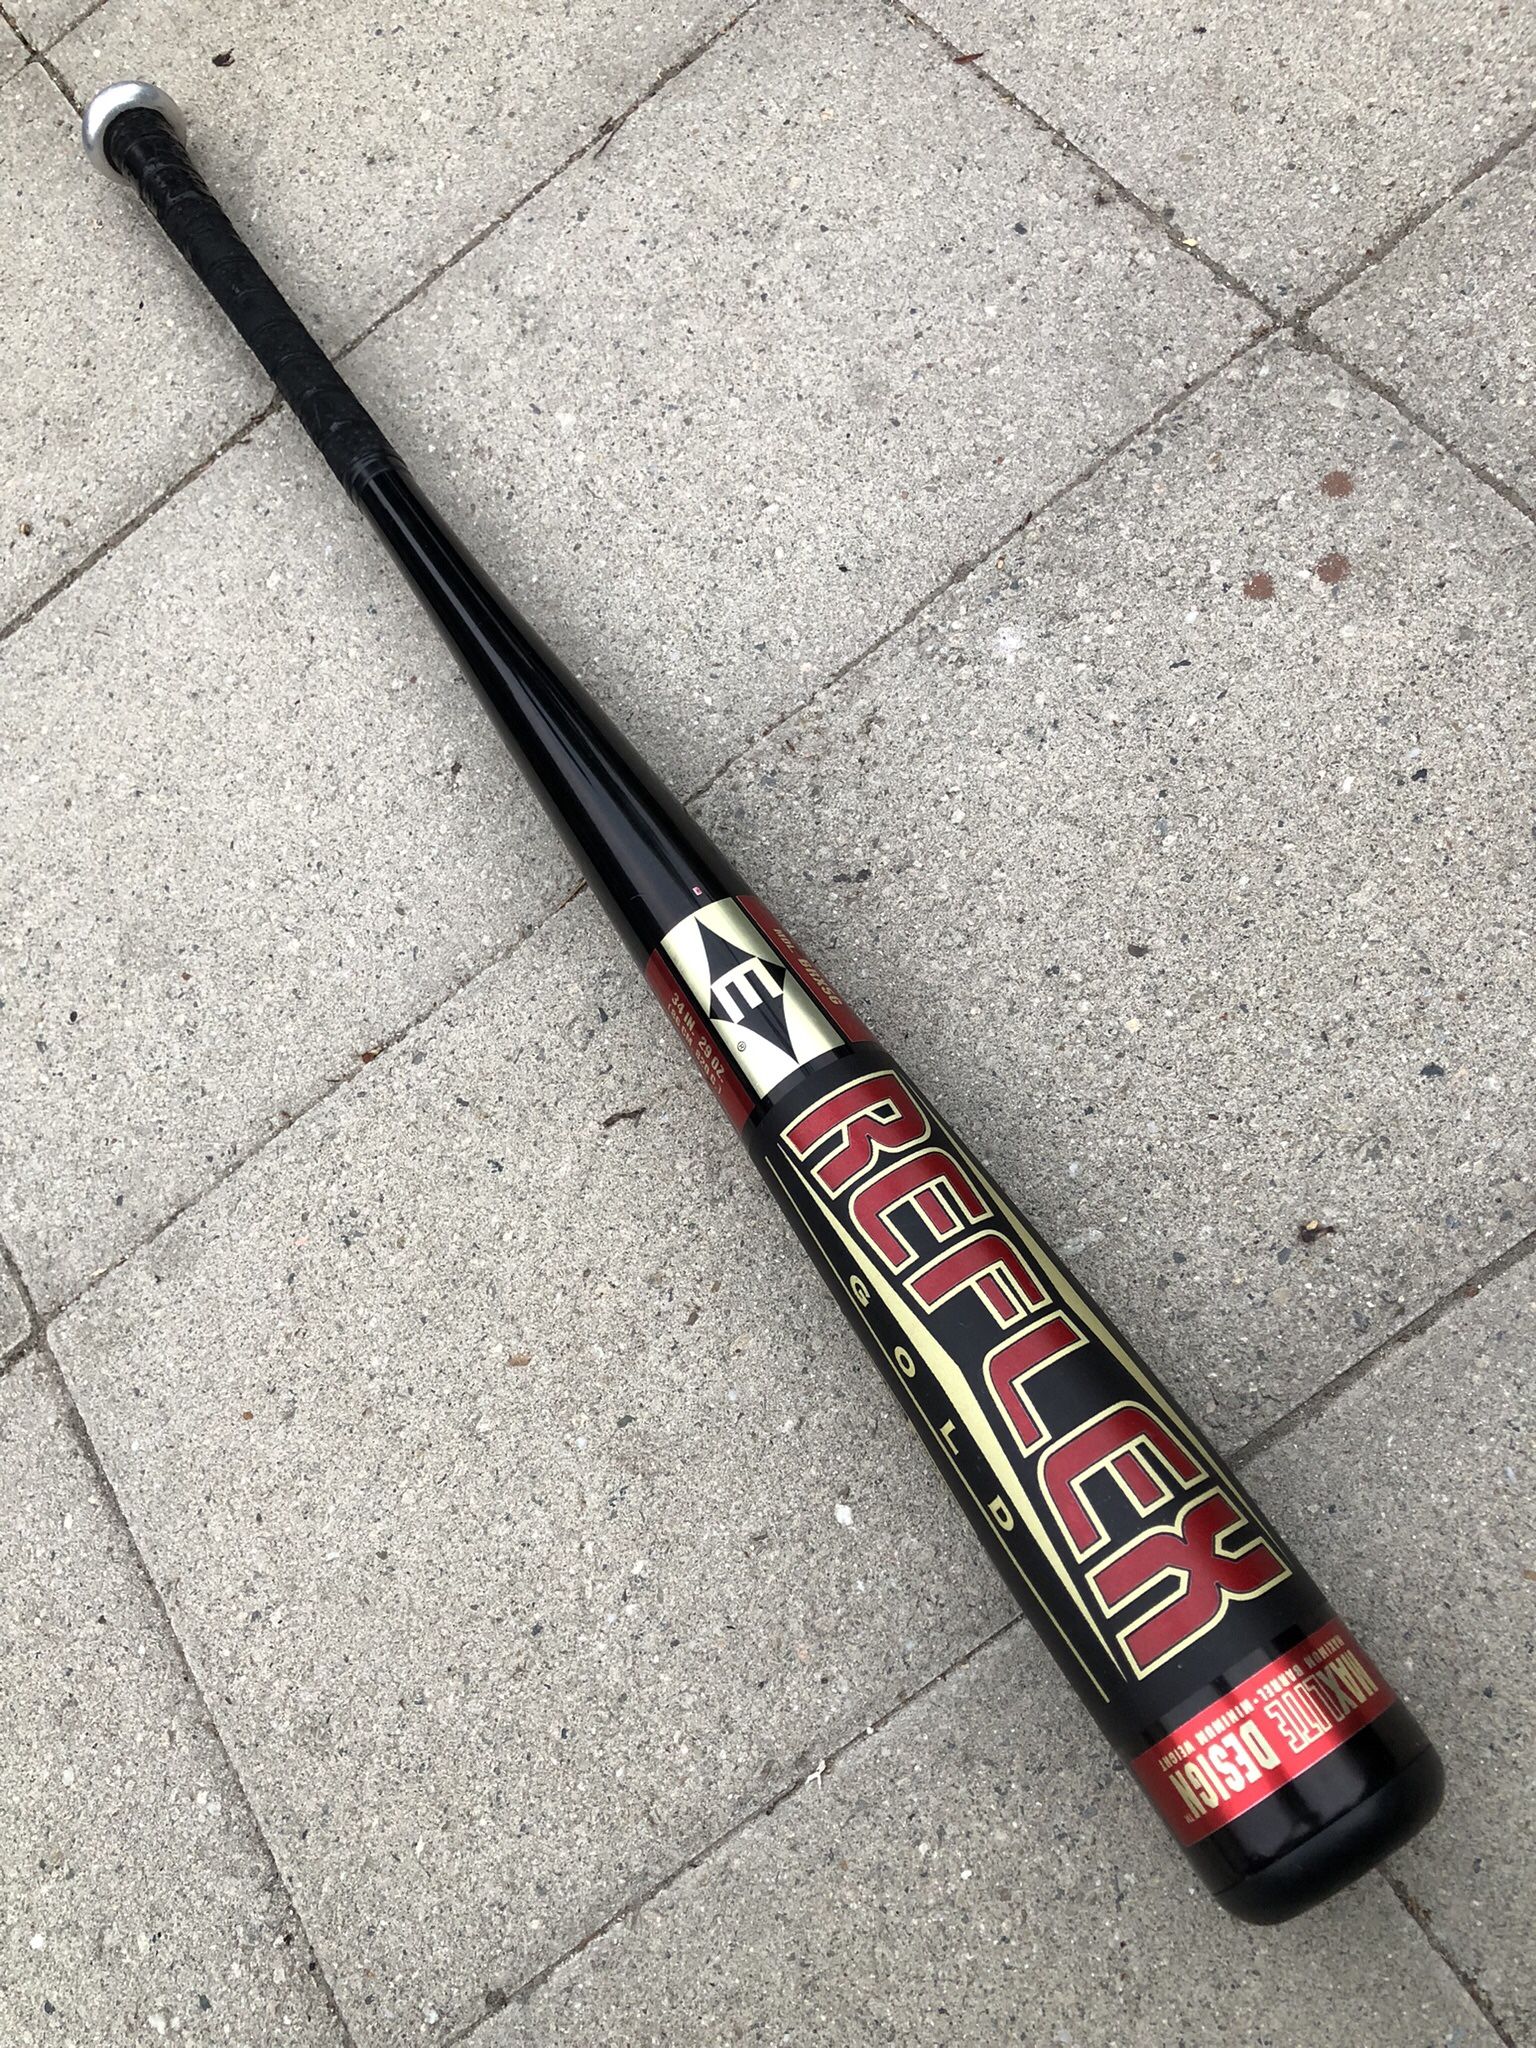 Easton Reflex Gold Baseball Bat 34” -5 In Excellent Condition  Hot Bat rare Bat especially in this condition